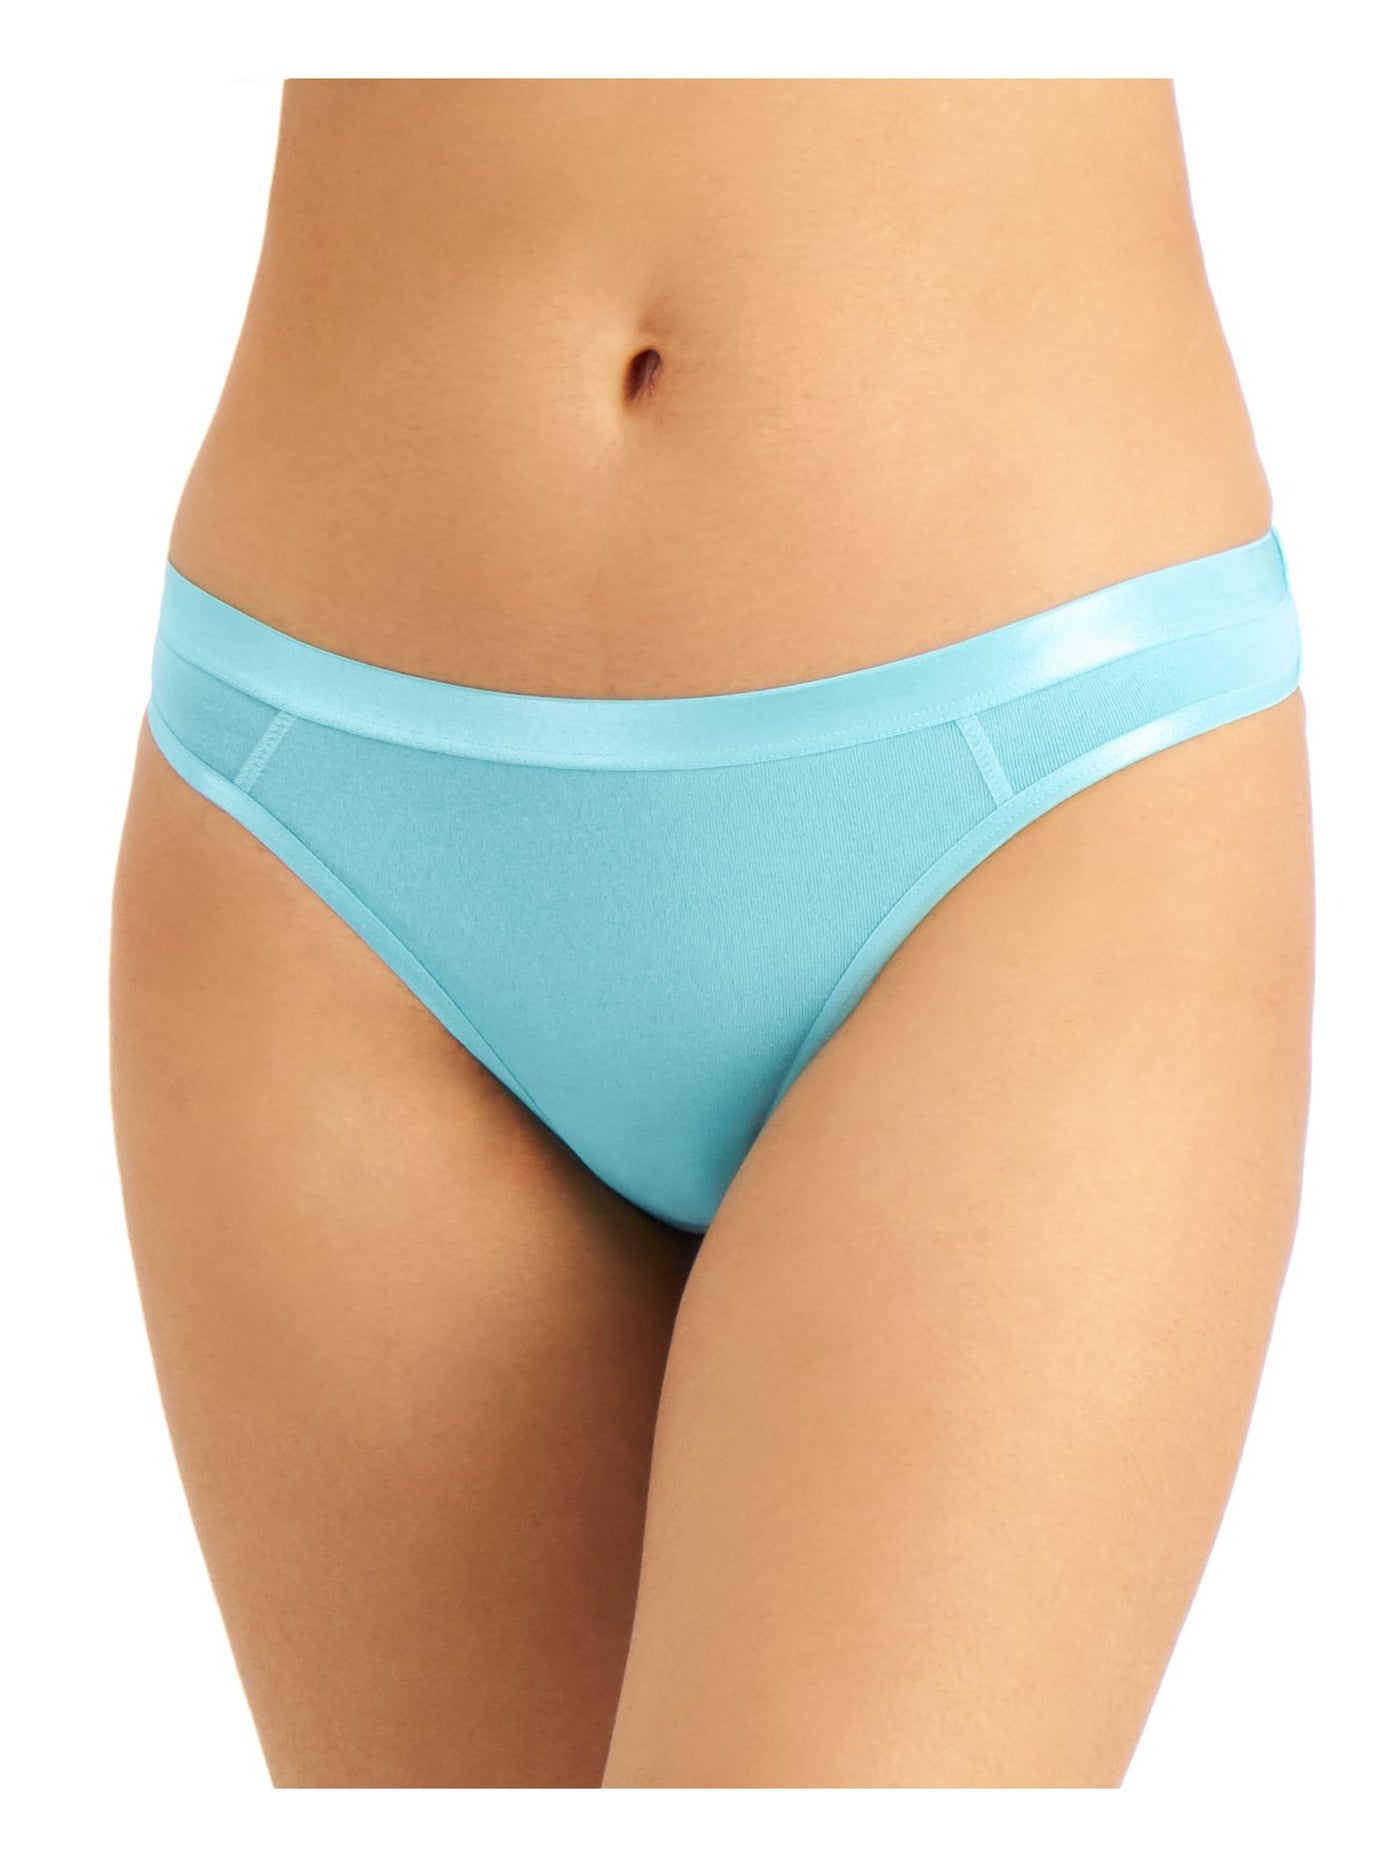 JENNI Intimates Aqua Decorative Front Seams Thong Underwear XXXL